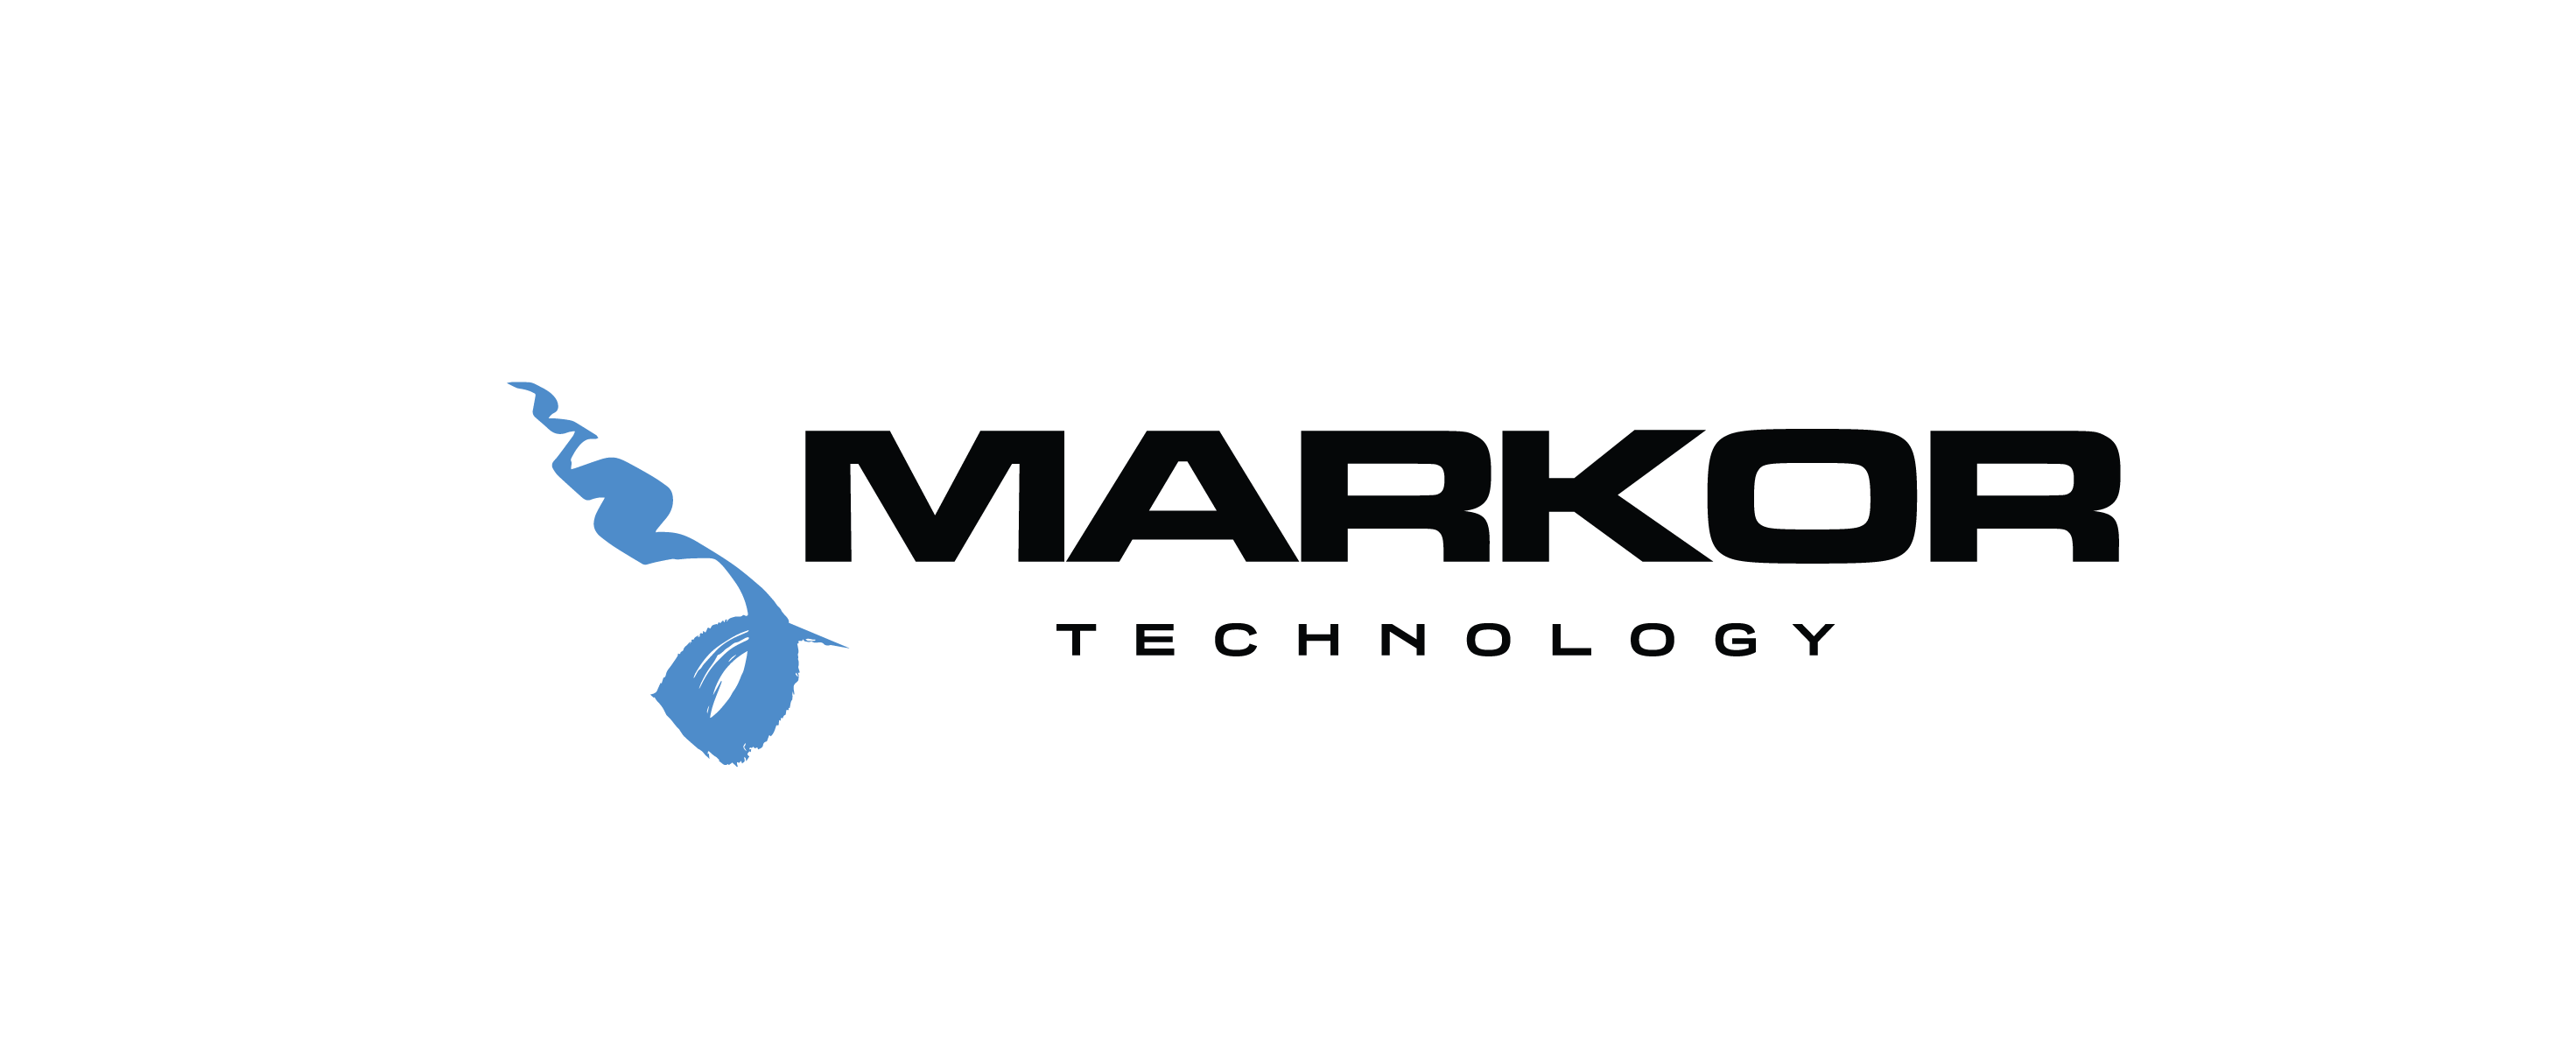 Markor Technology games